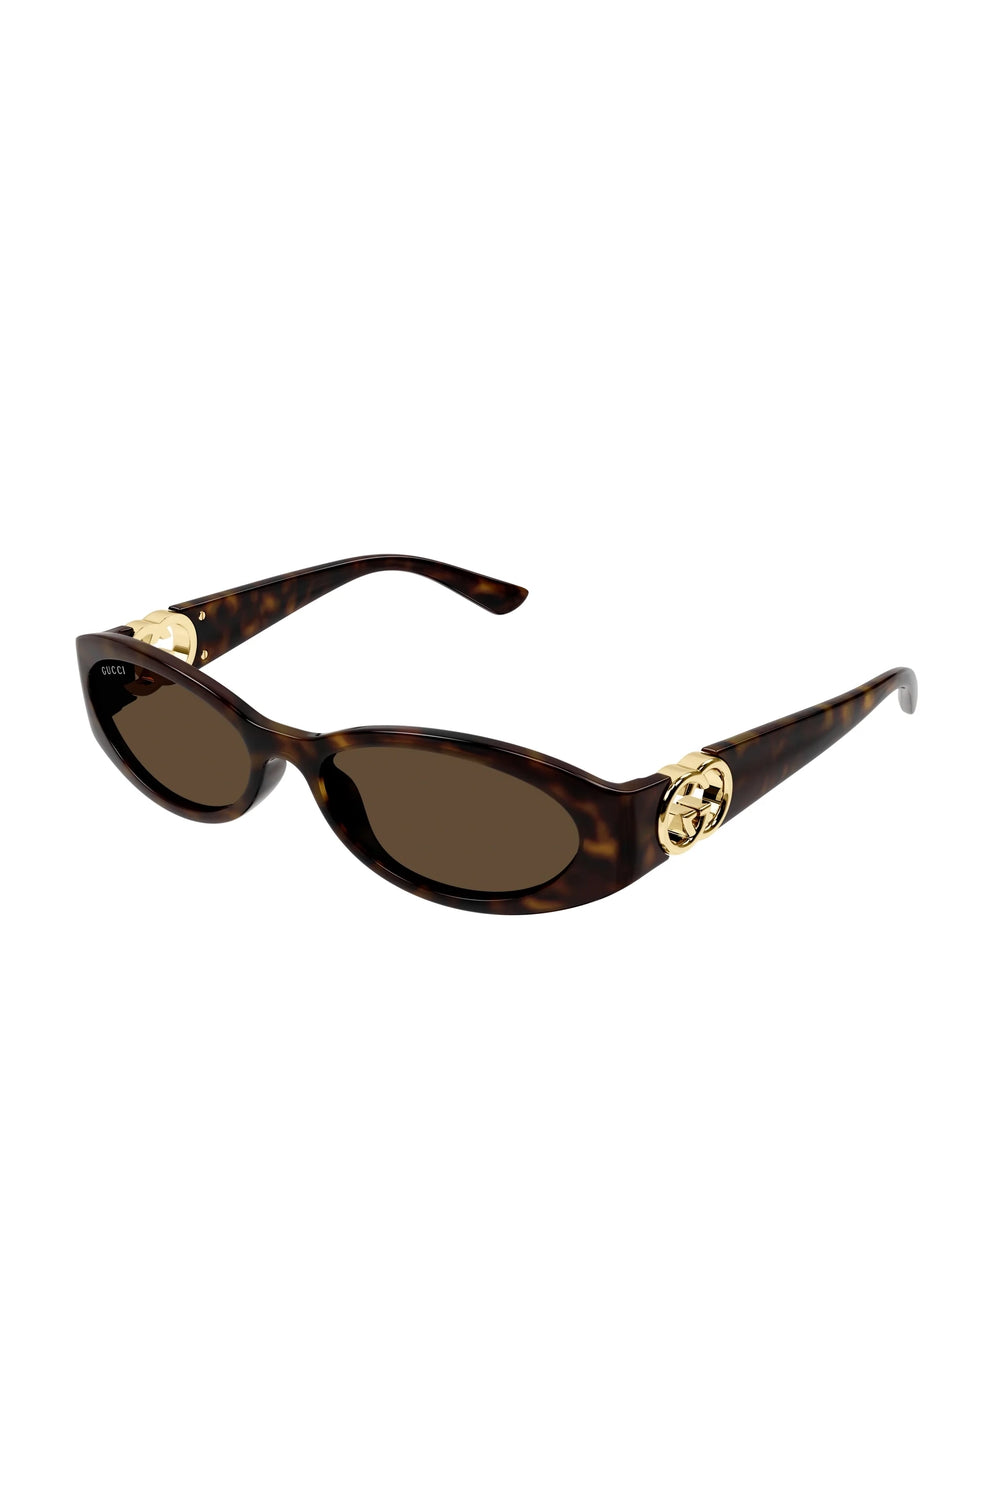 Gucci Oval Sunglasses Tortoiseshell GG1660S002